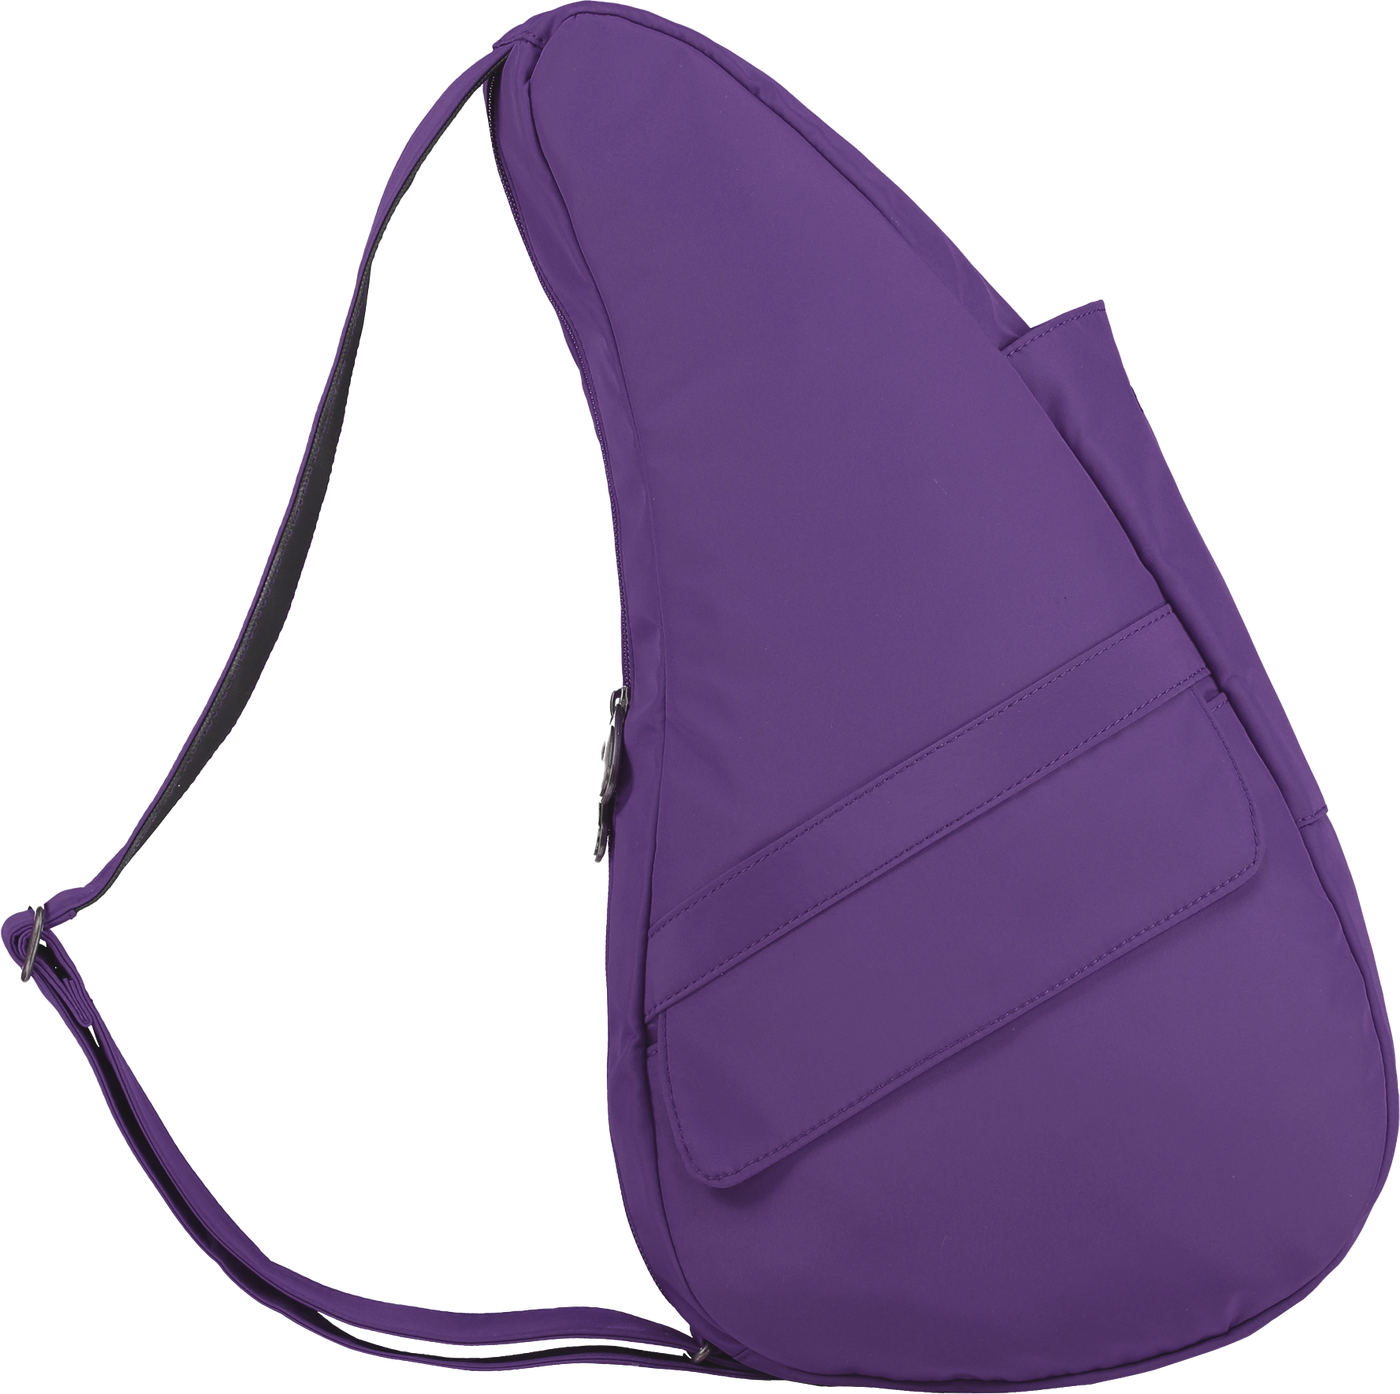 AmeriBag Healthy Back Bag tote Microfiber Extra Small (Wild Violet)